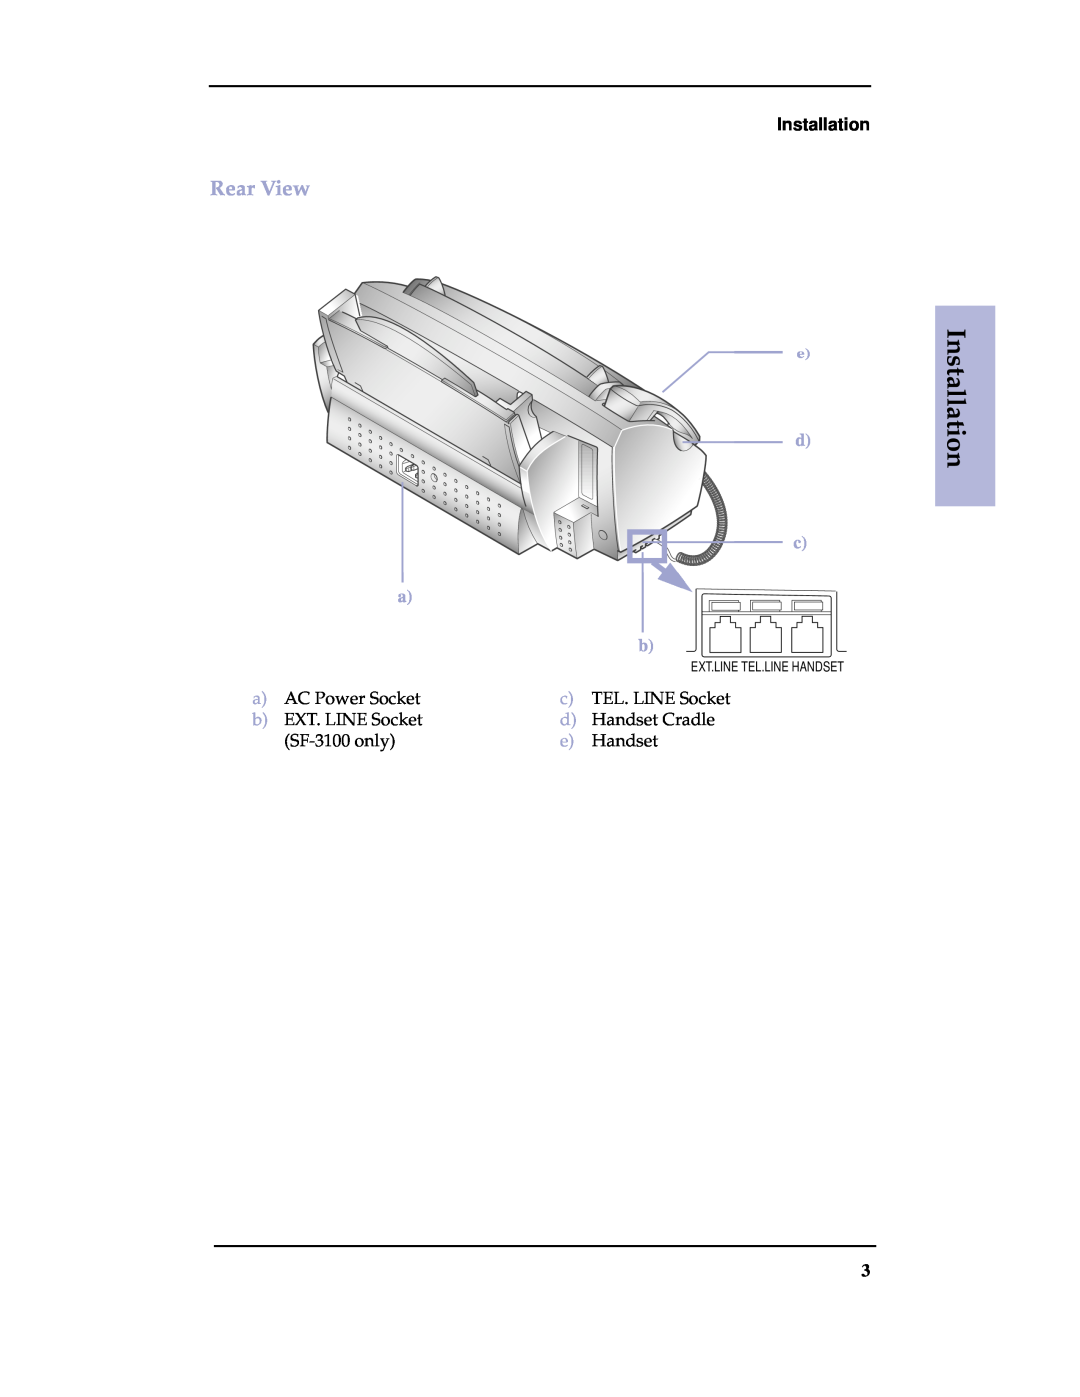 Samsung SF-3100 manual Rear View, Installation 